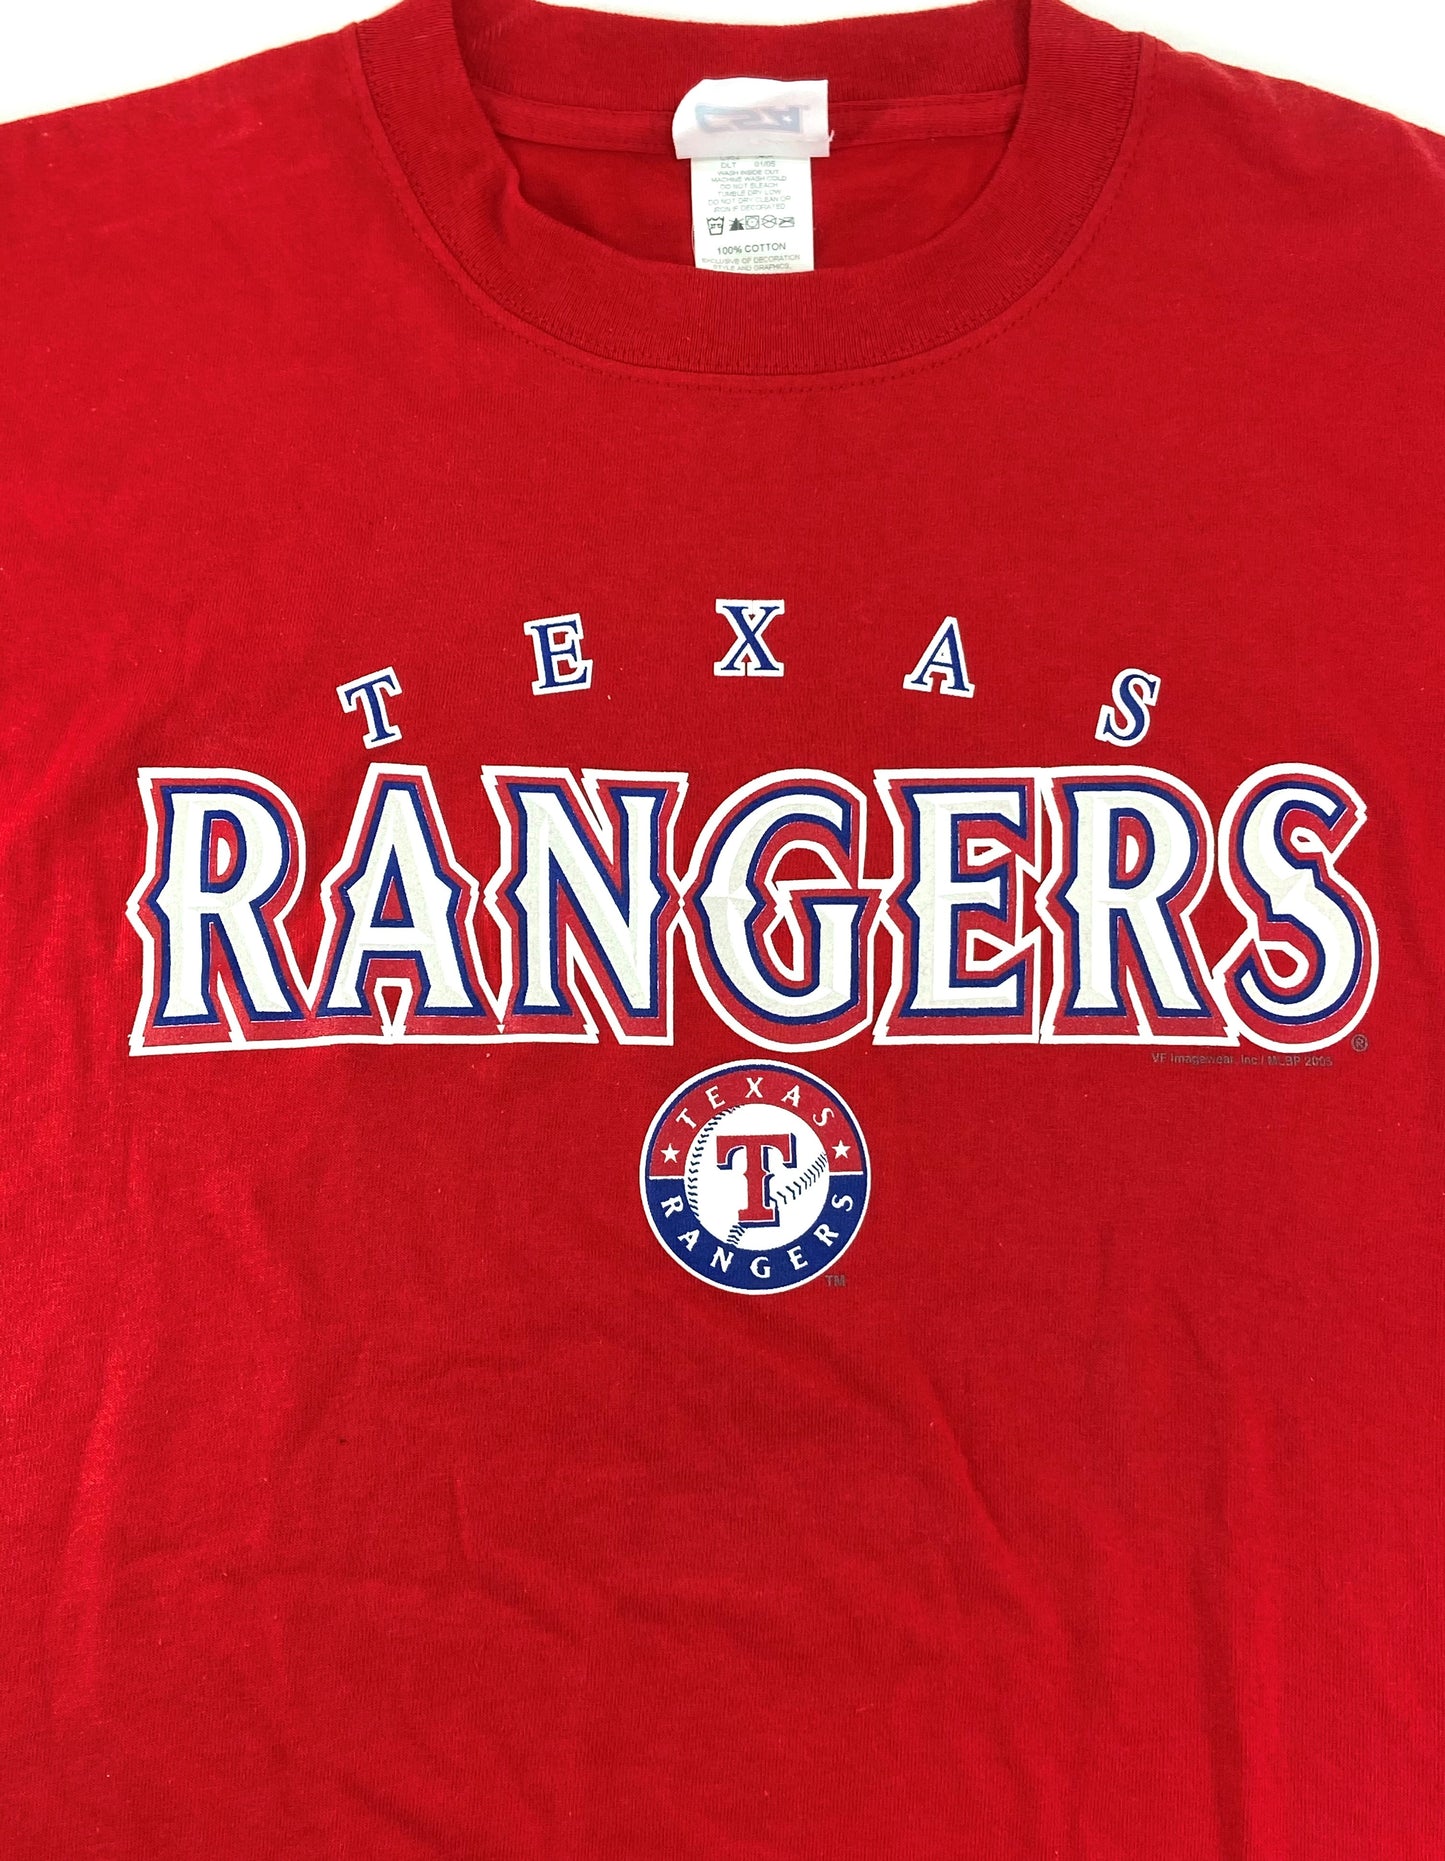 Texas Rangers 2005 MLB Adult Medium Red T-Shirt NOS by CSA